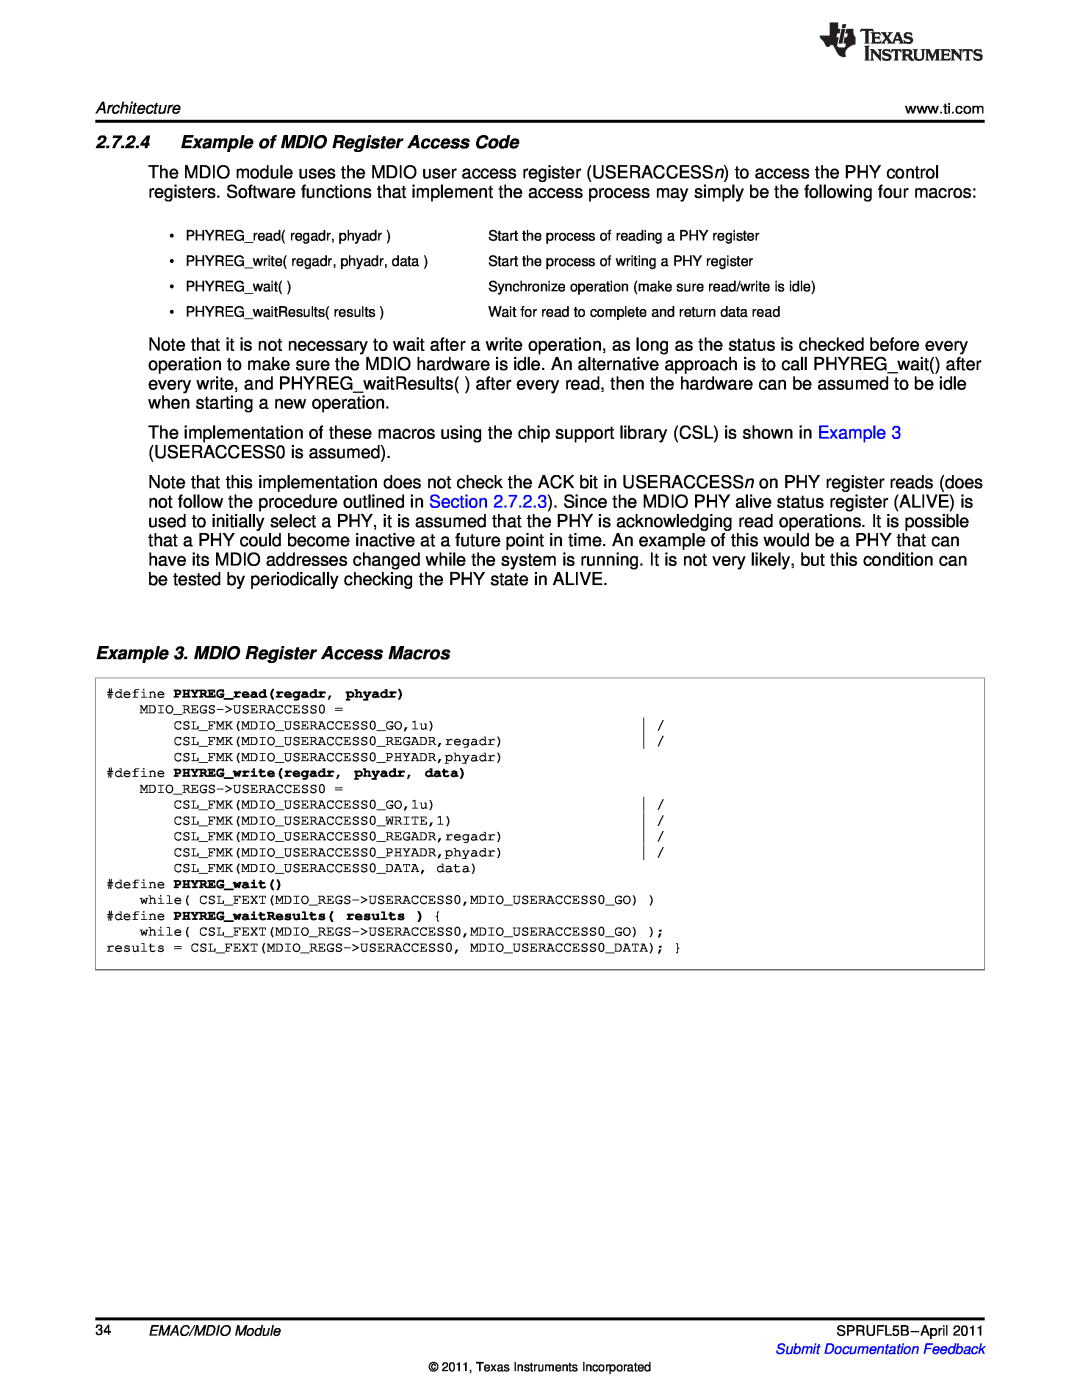 Texas Instruments TMS320C674X manual Example of MDIO Register Access Code, Example 3. MDIO Register Access Macros 